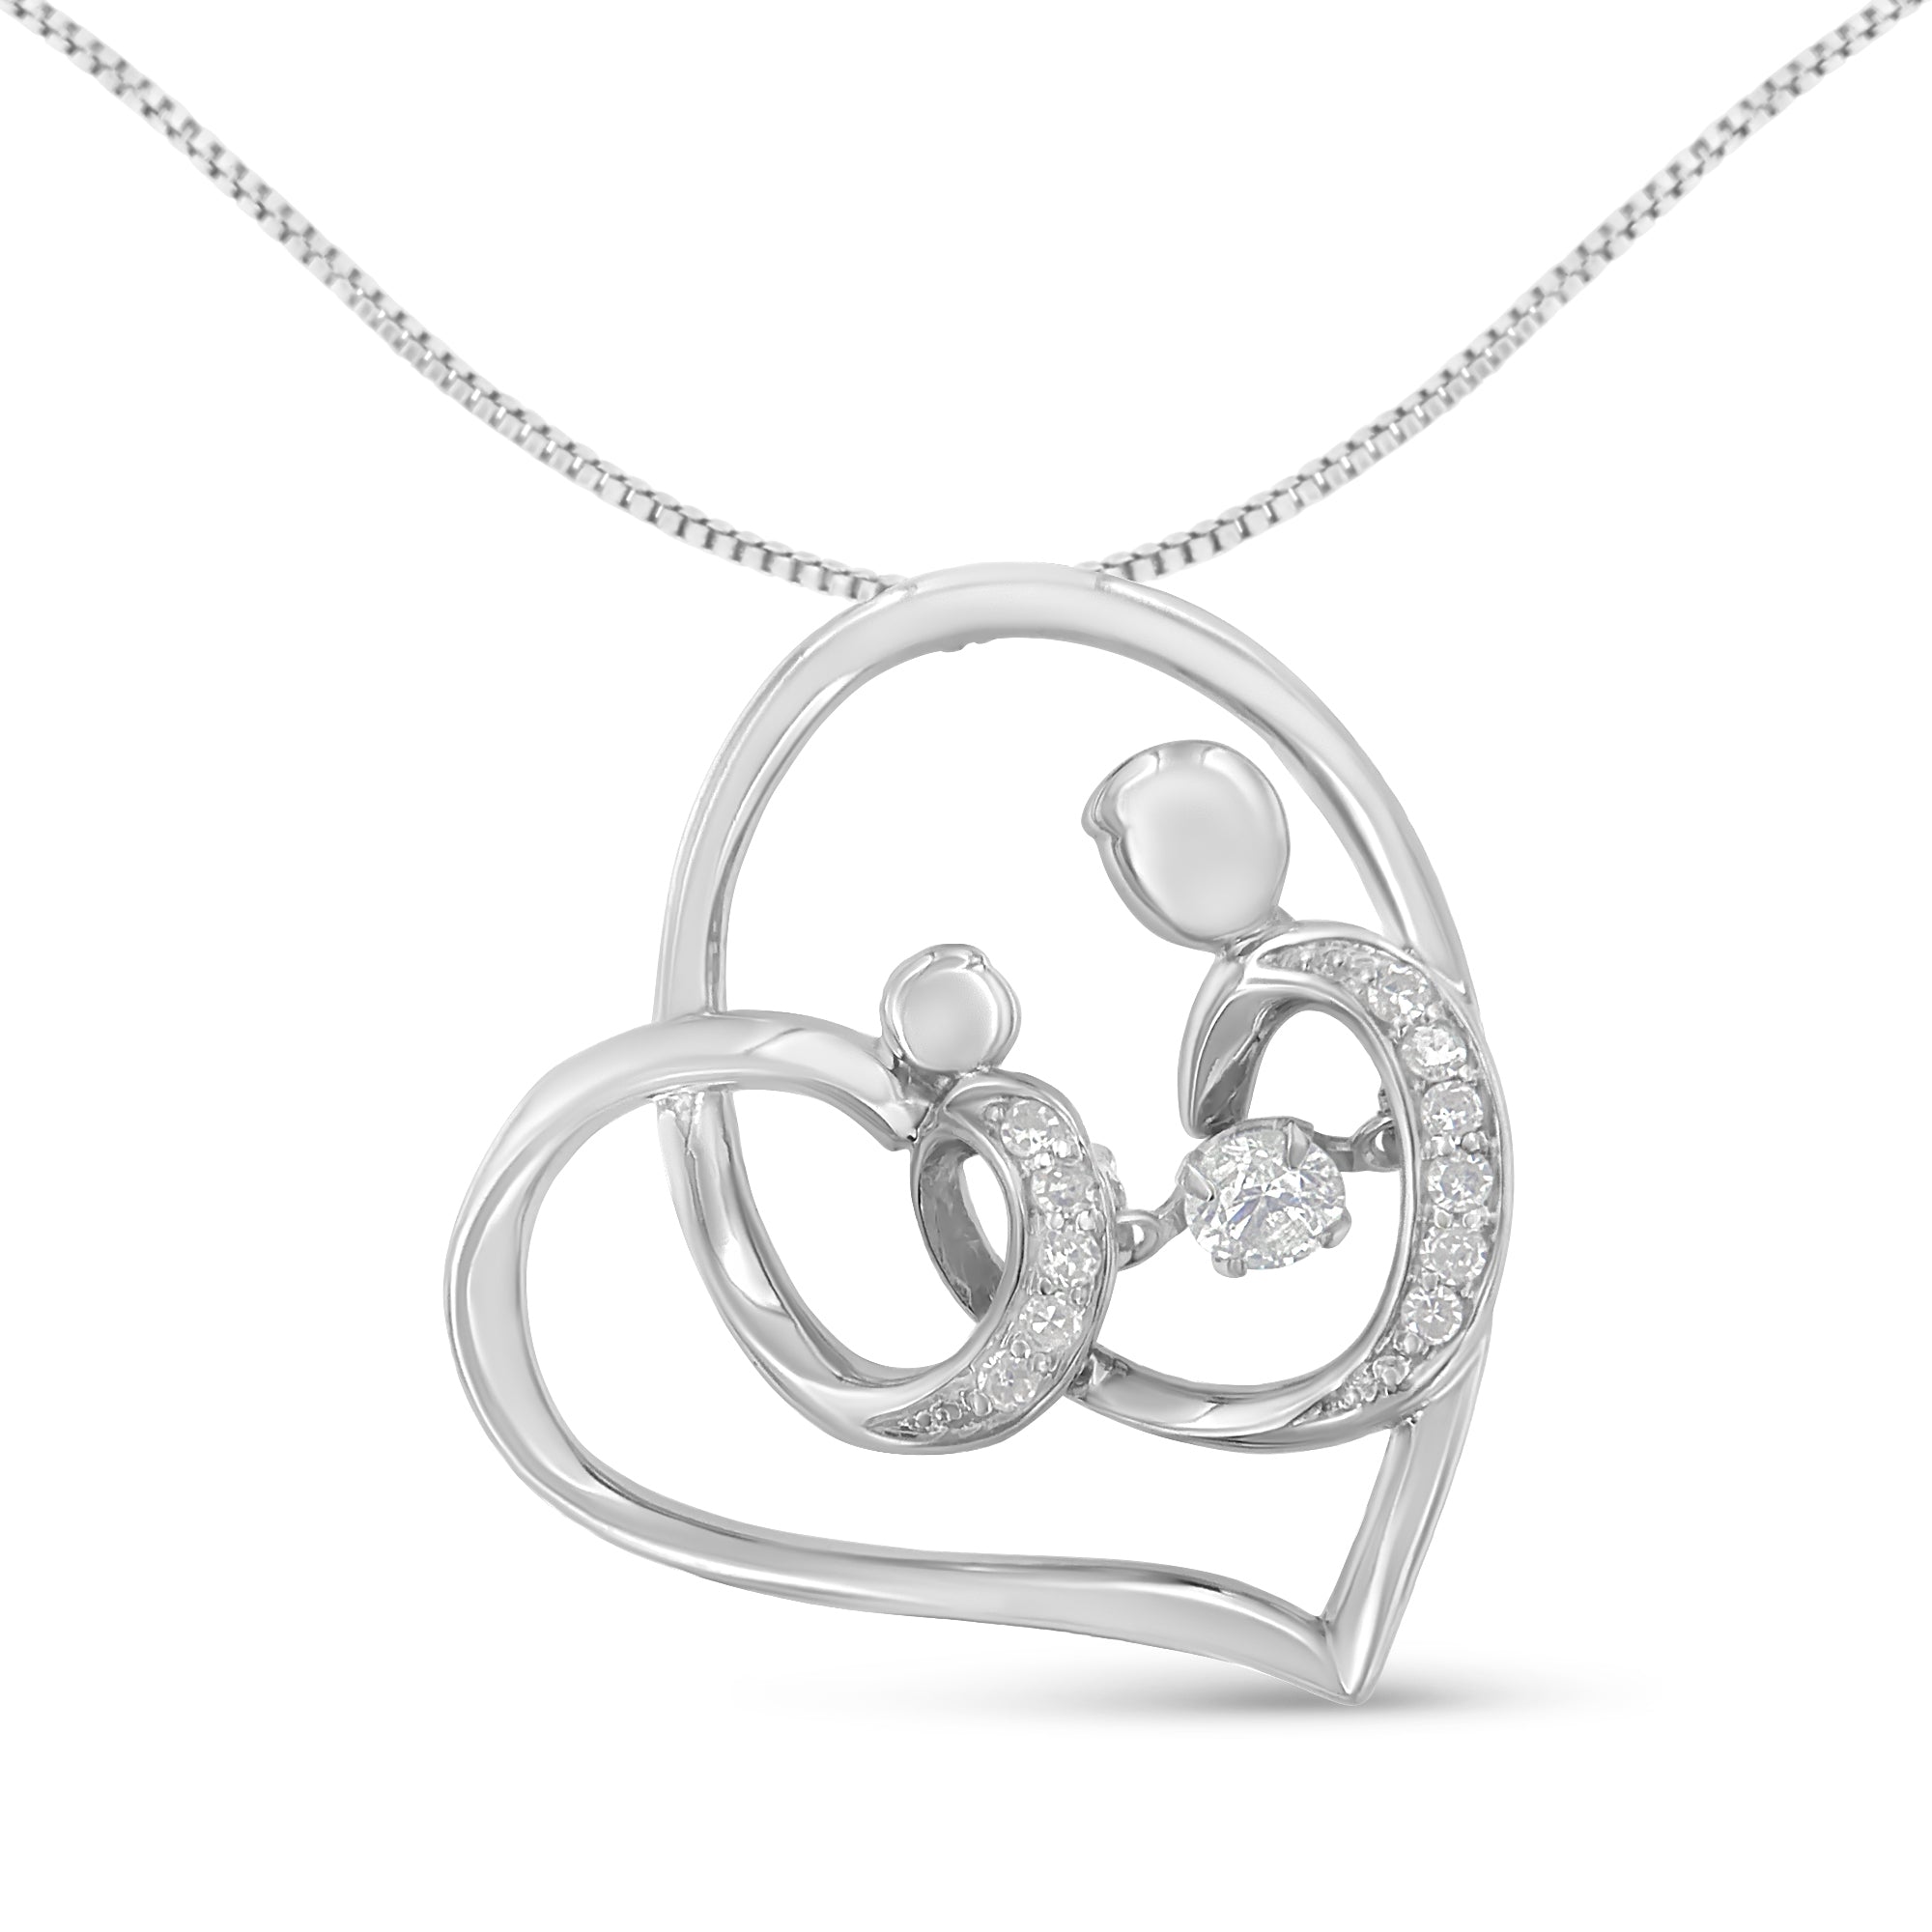 .925 Sterling Silver 1/6 cttw Diamond Heart Pendant Necklace (H-I, I1-I2) - LinkagejewelrydesignLinkagejewelrydesign